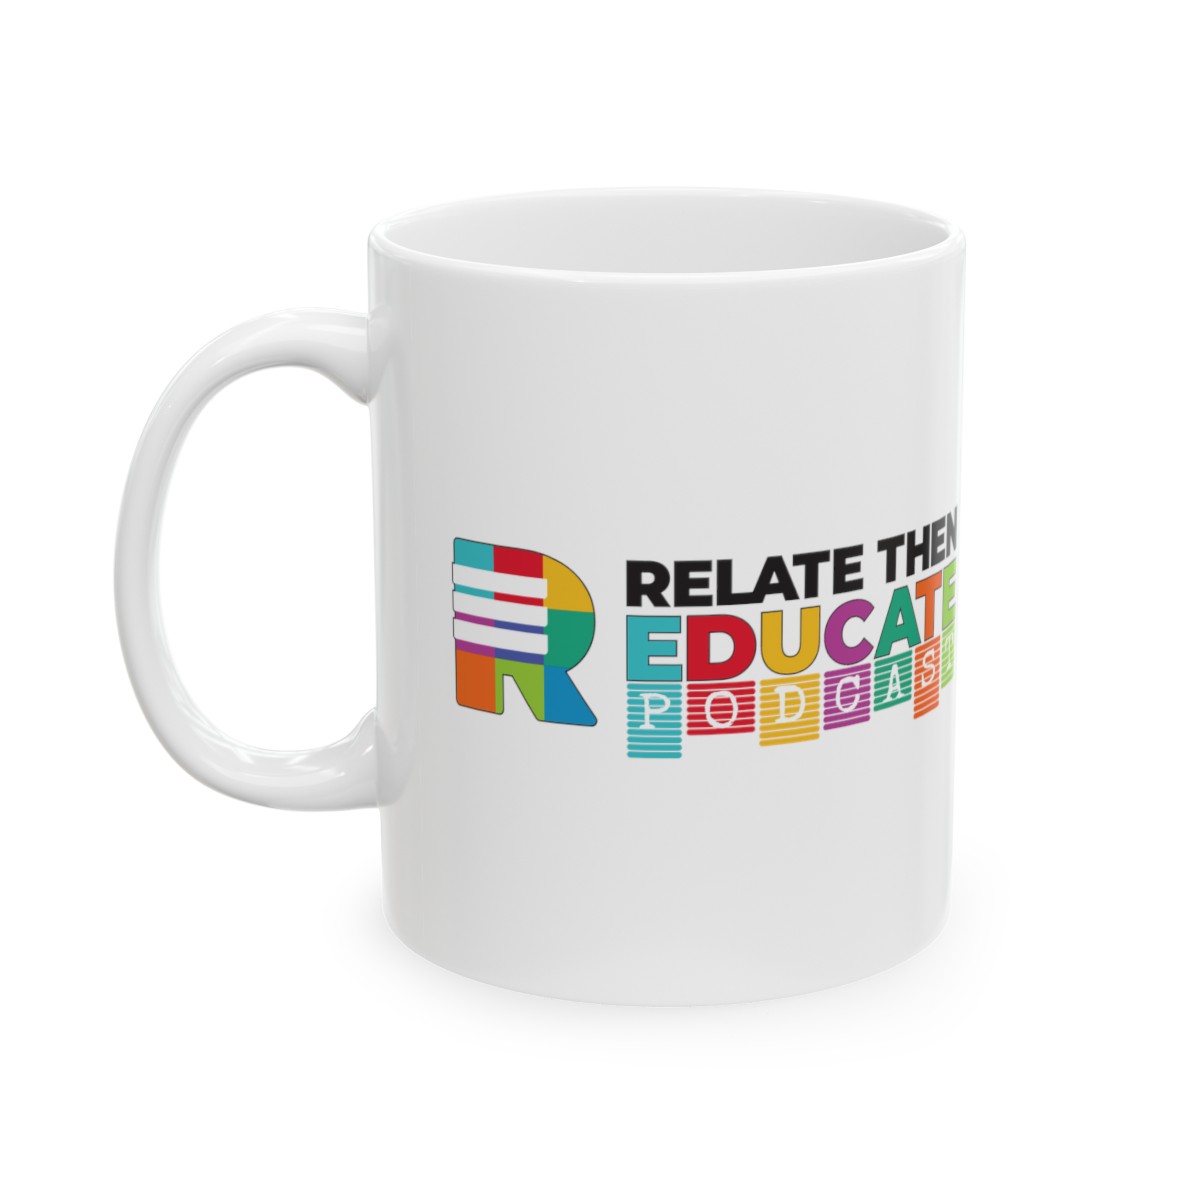 Relate Then Educate Podcast - 11oz White Mug for Teachers product thumbnail image